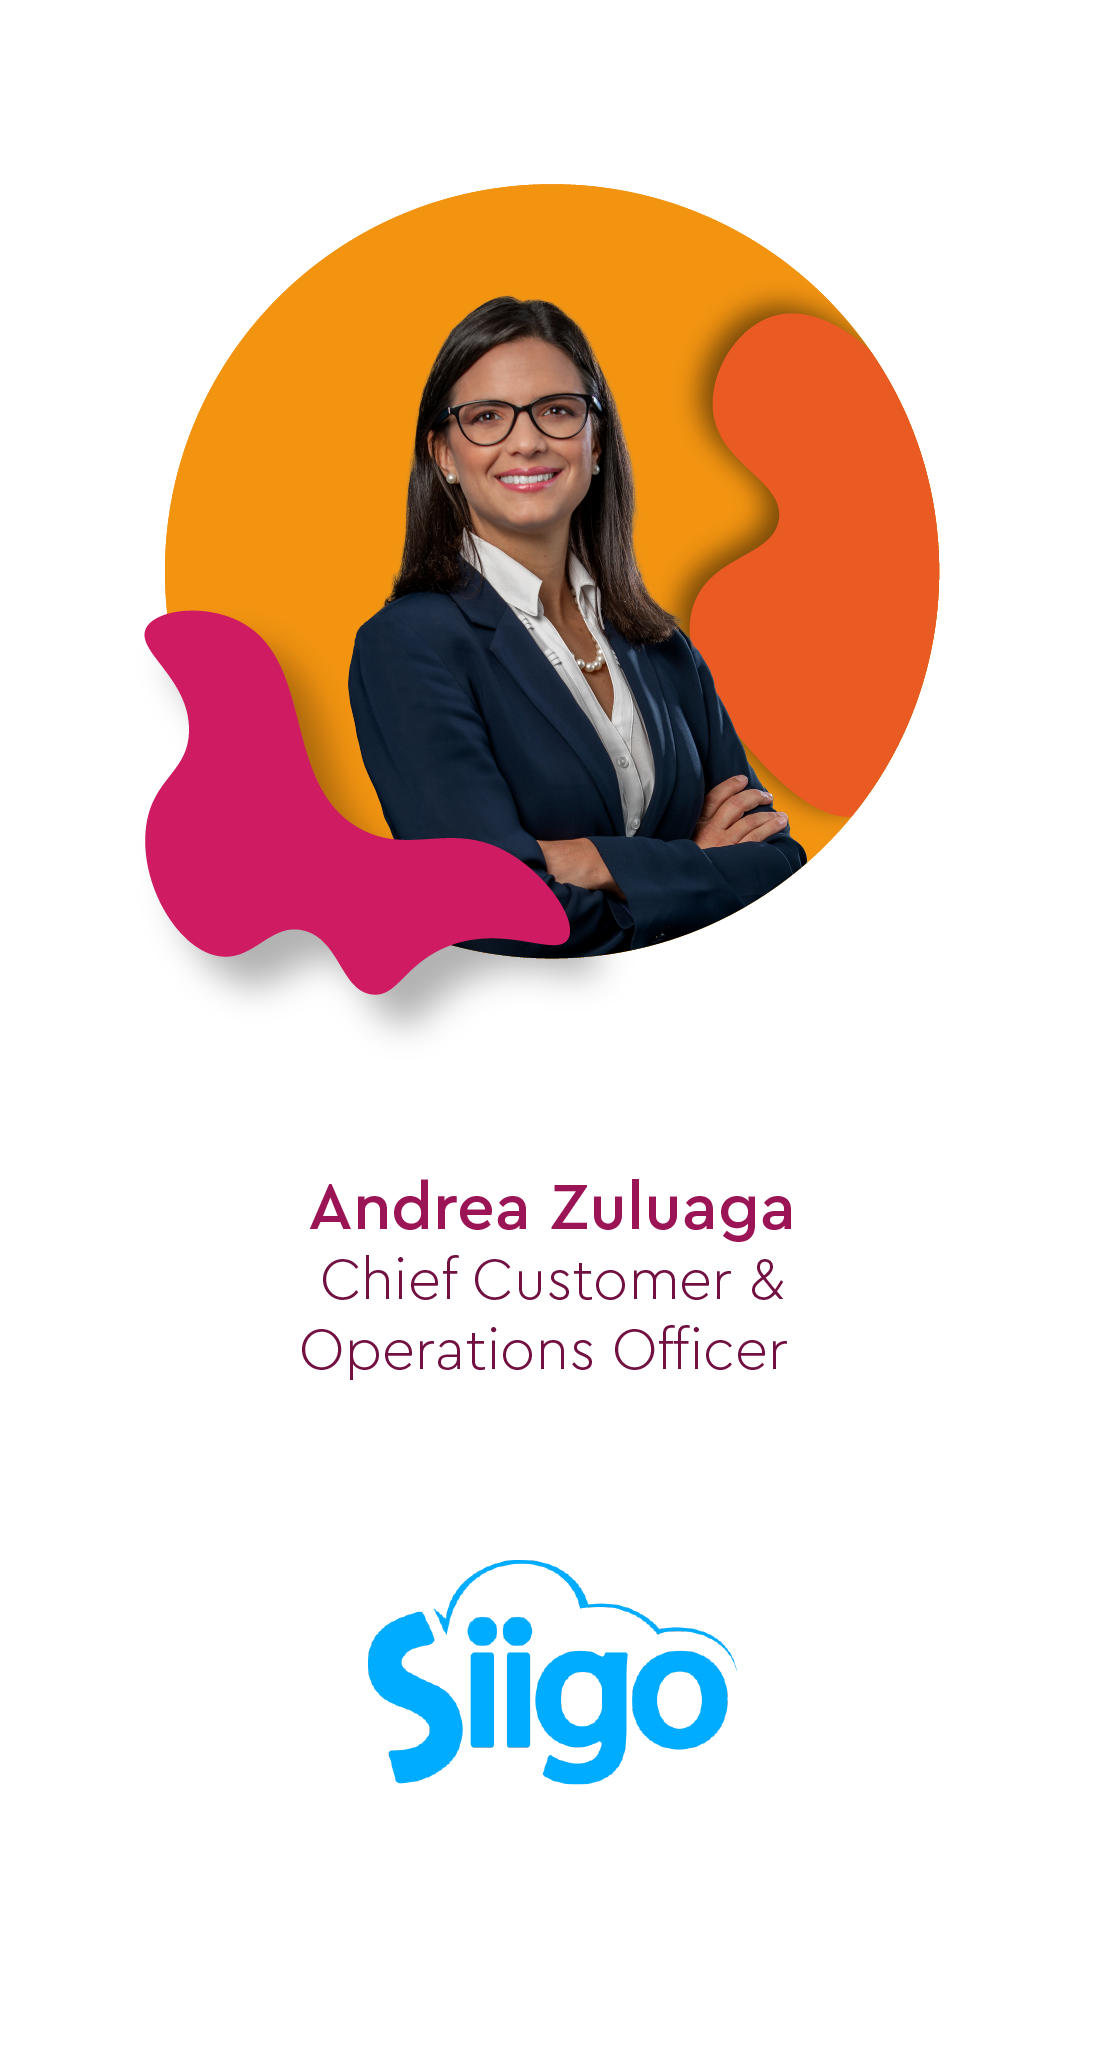 Andrea Zuluaga